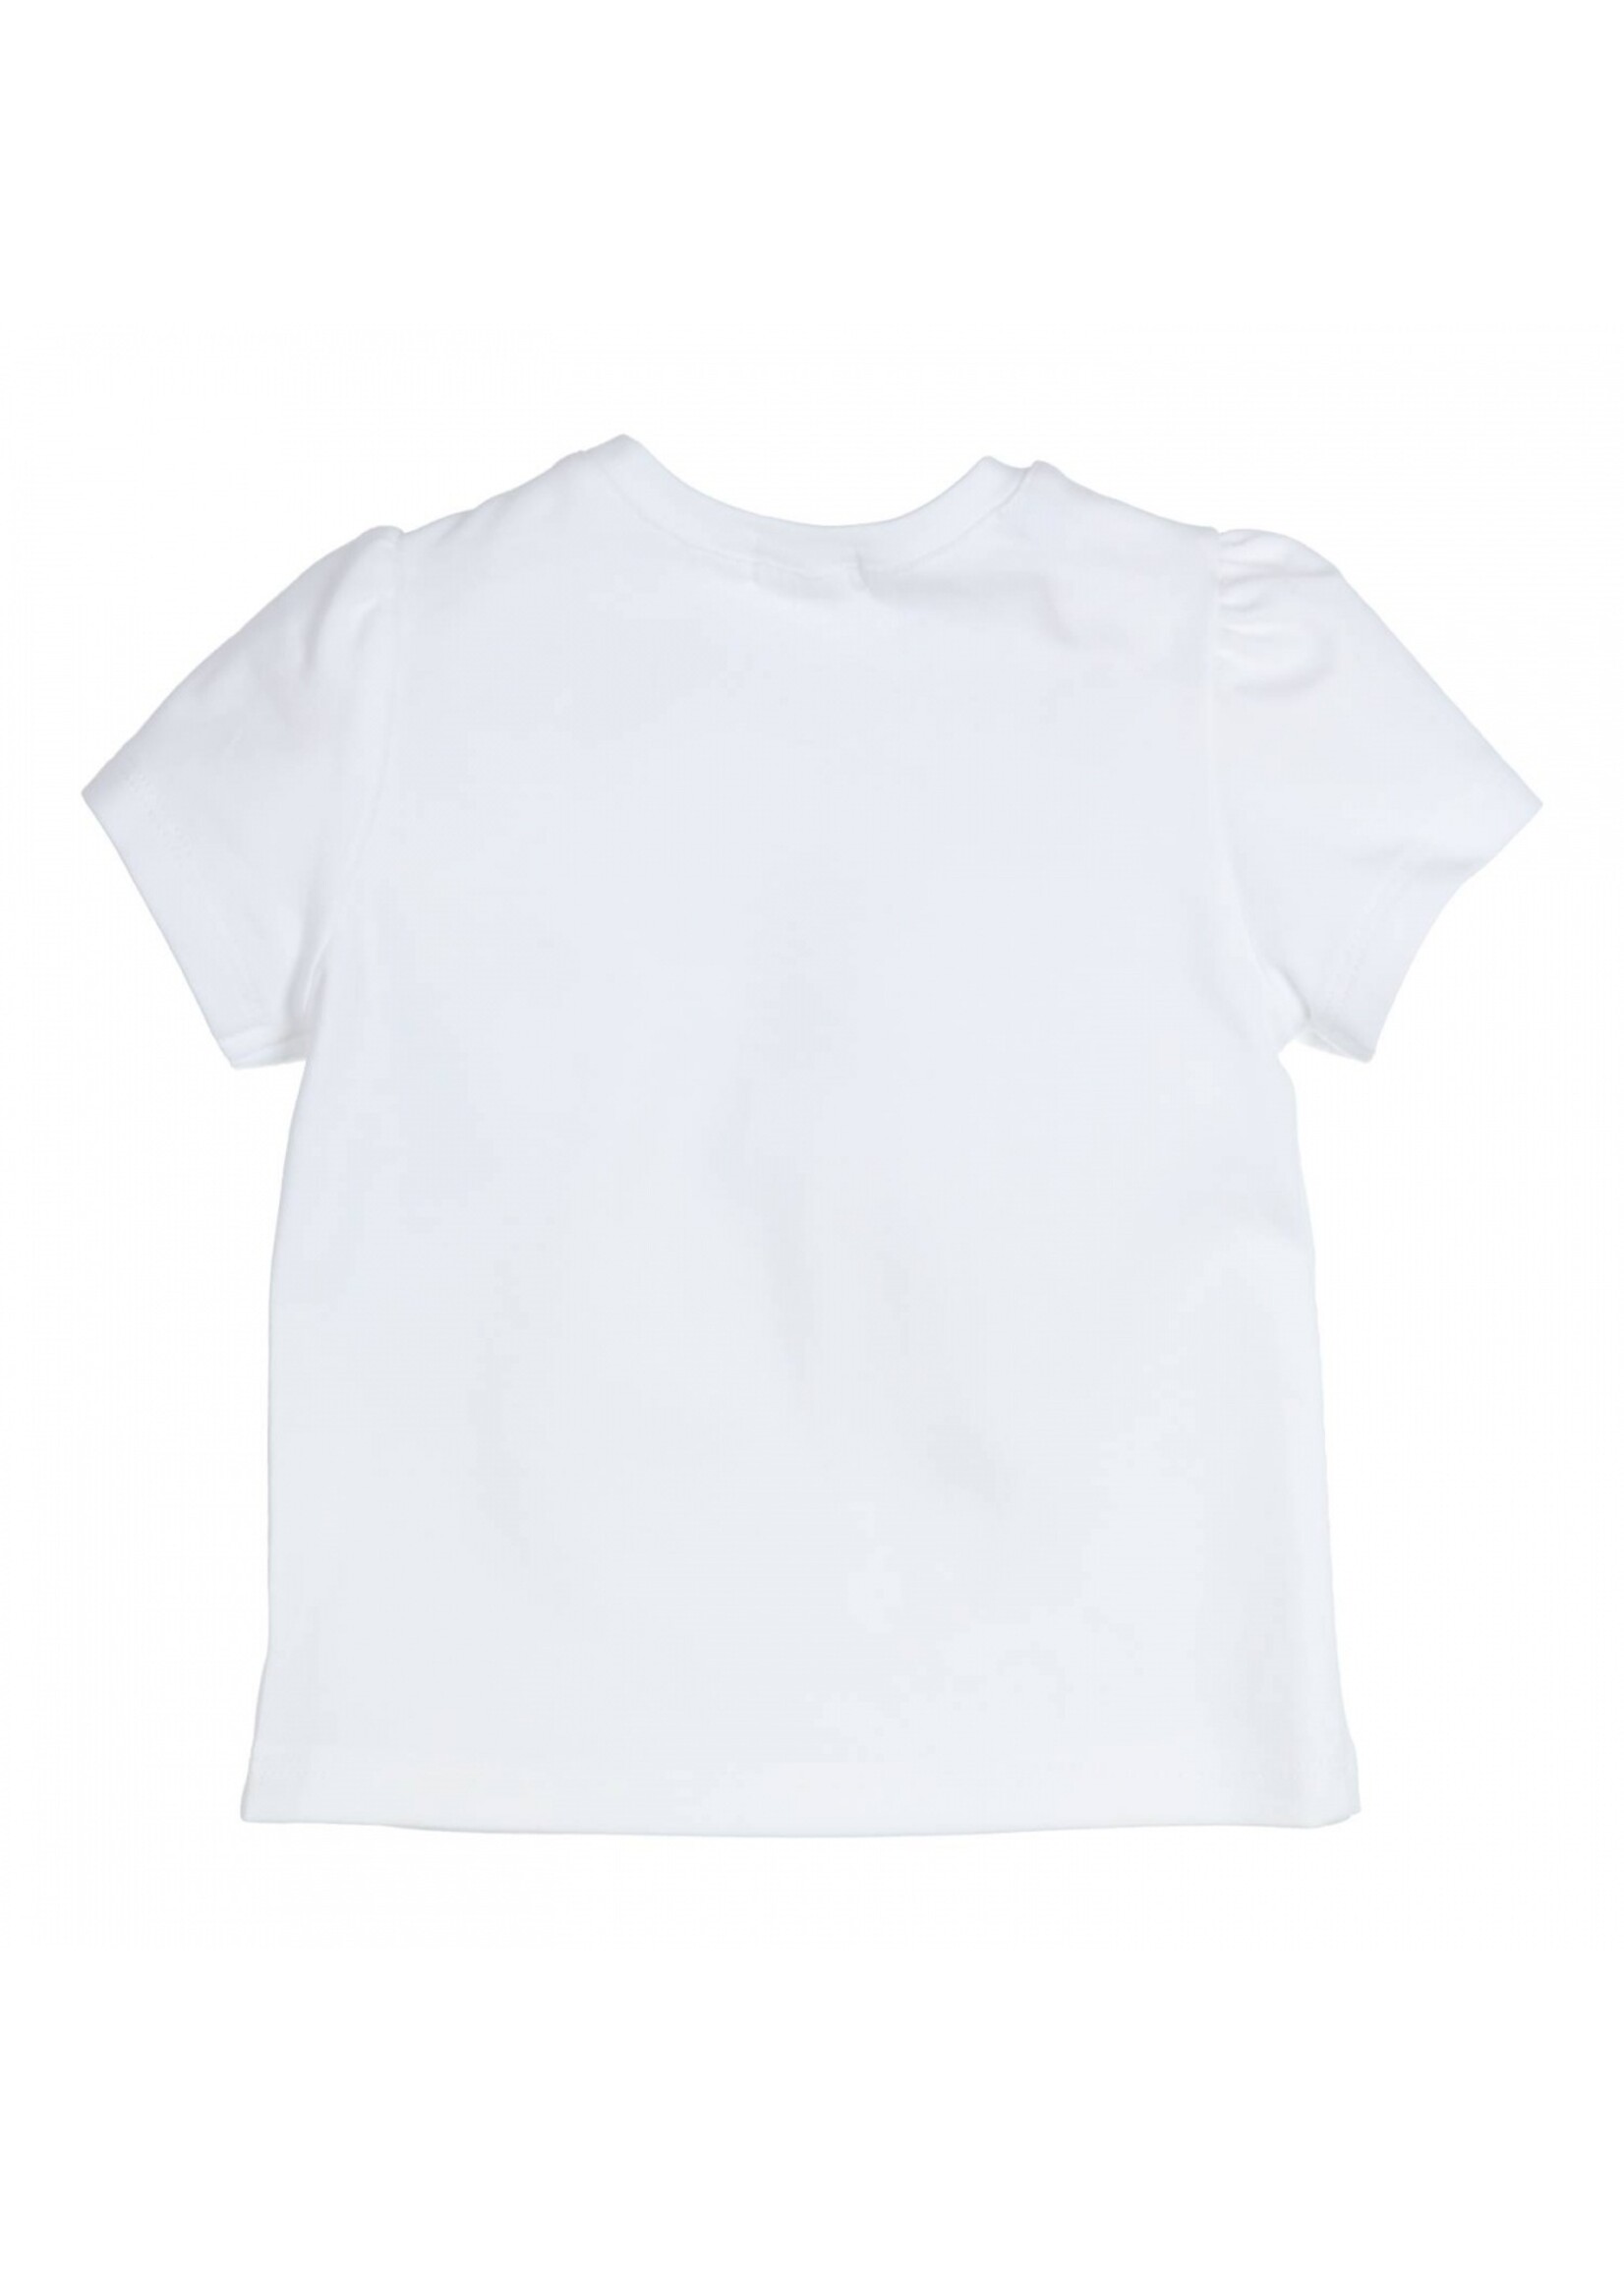 Gymp t-shirt aerobic white